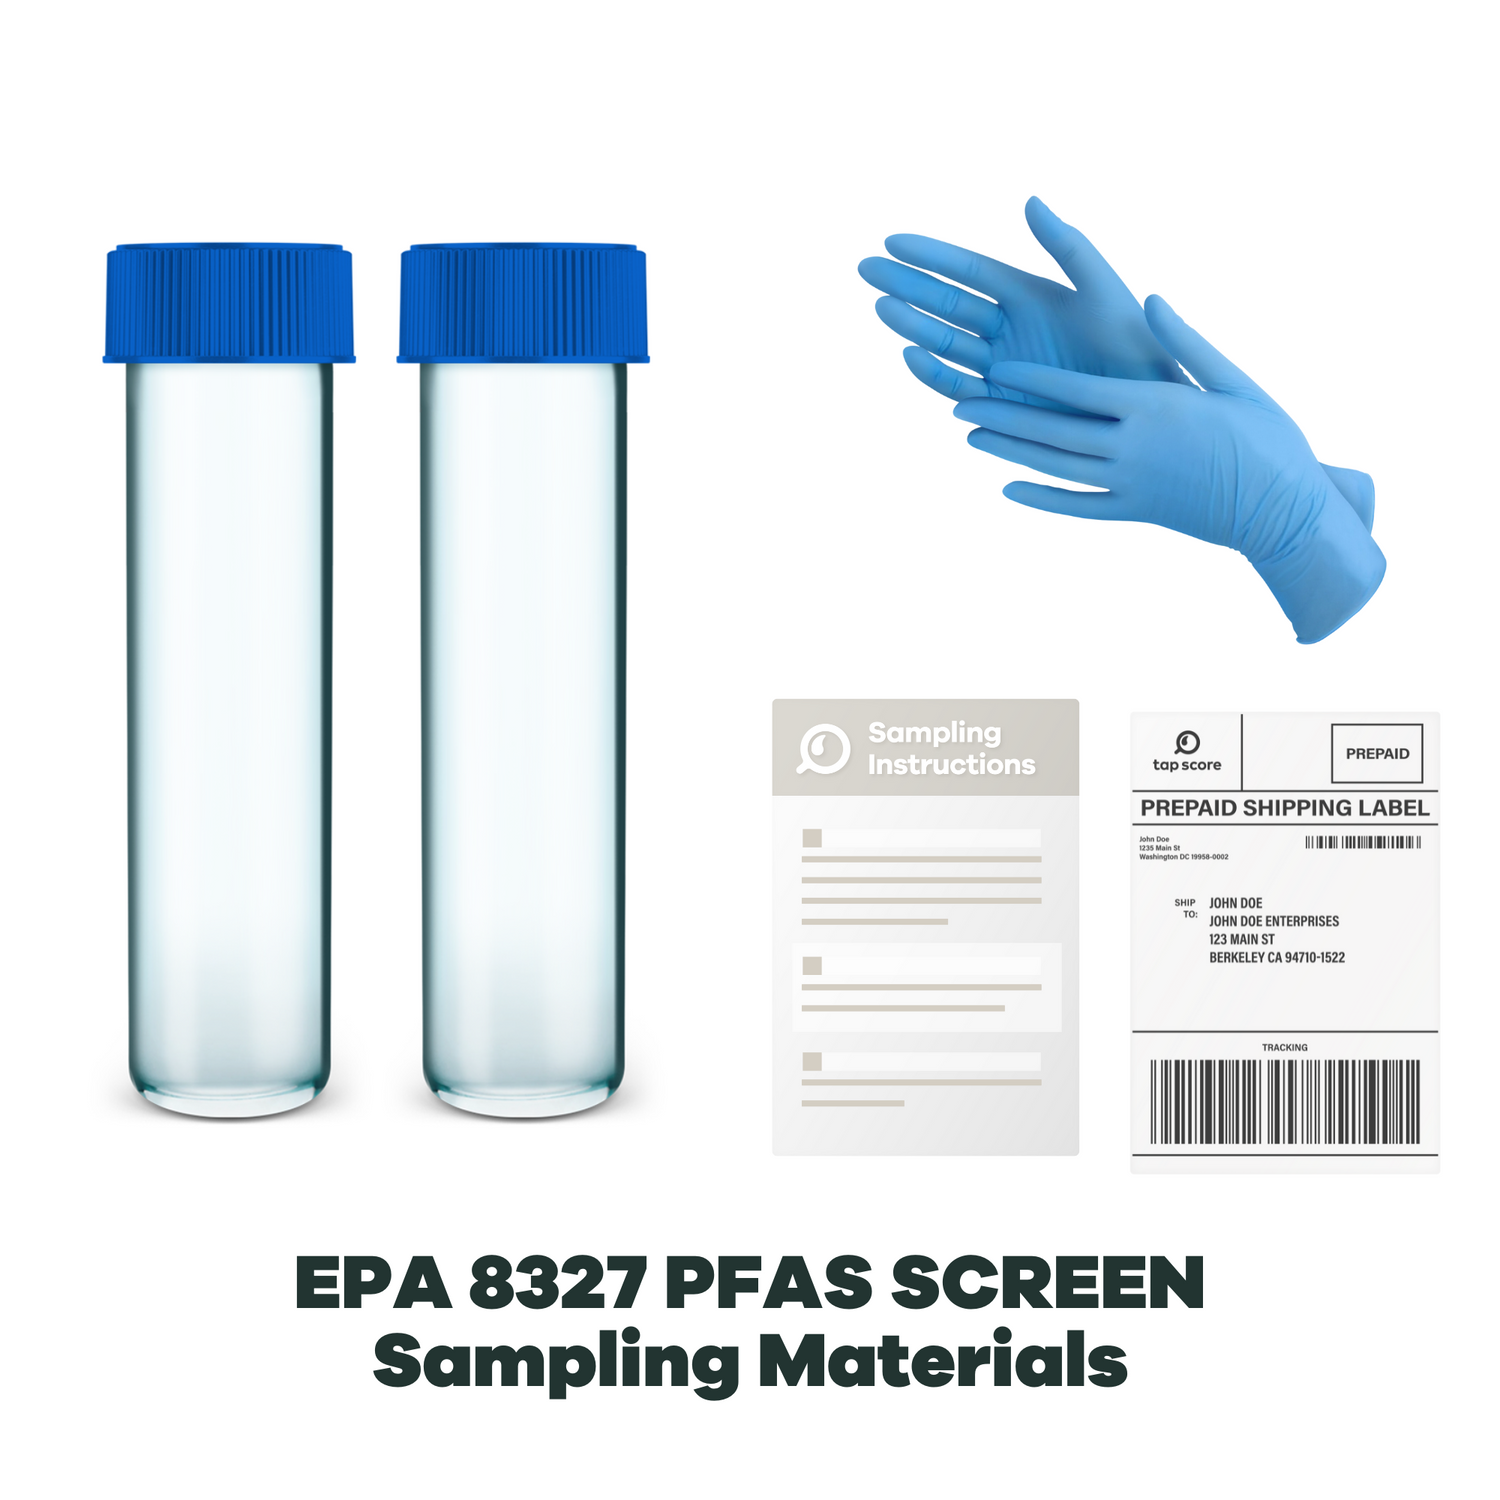 EPA 8327 PFAS Screen Lab Testing Kit - Sampling Materials